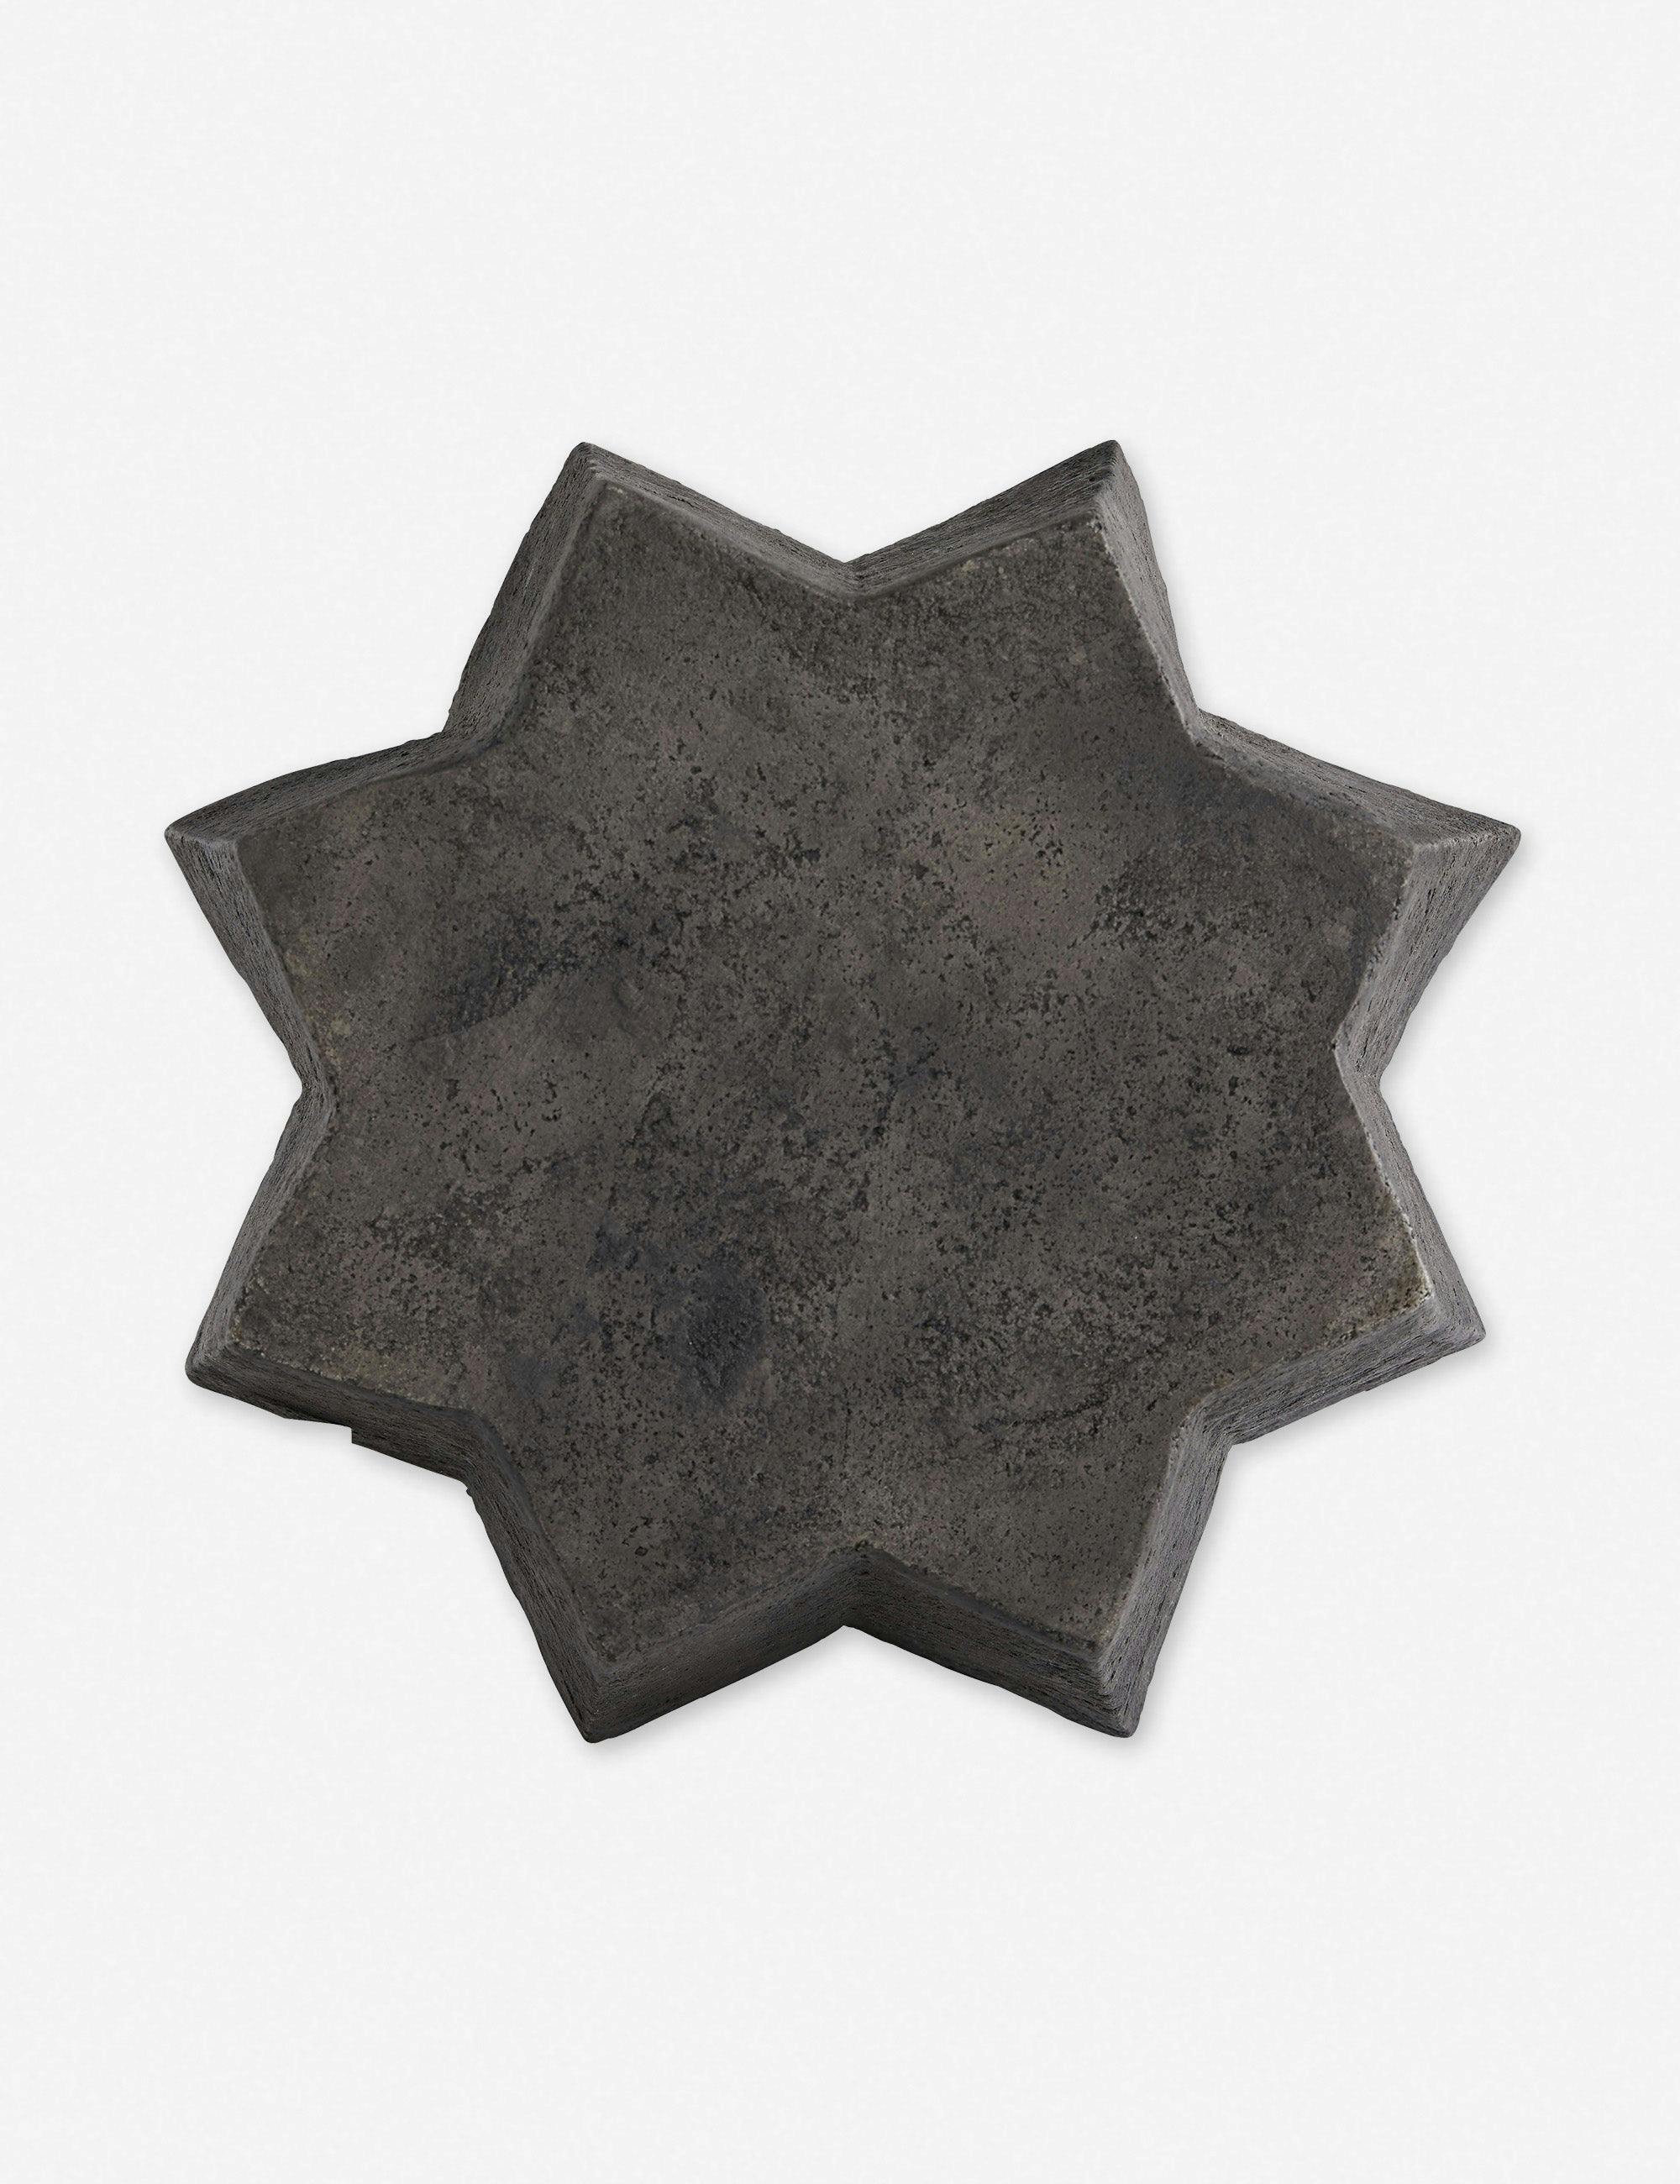 Dexter Brutalist-Inspired Black Stone Round Side Table